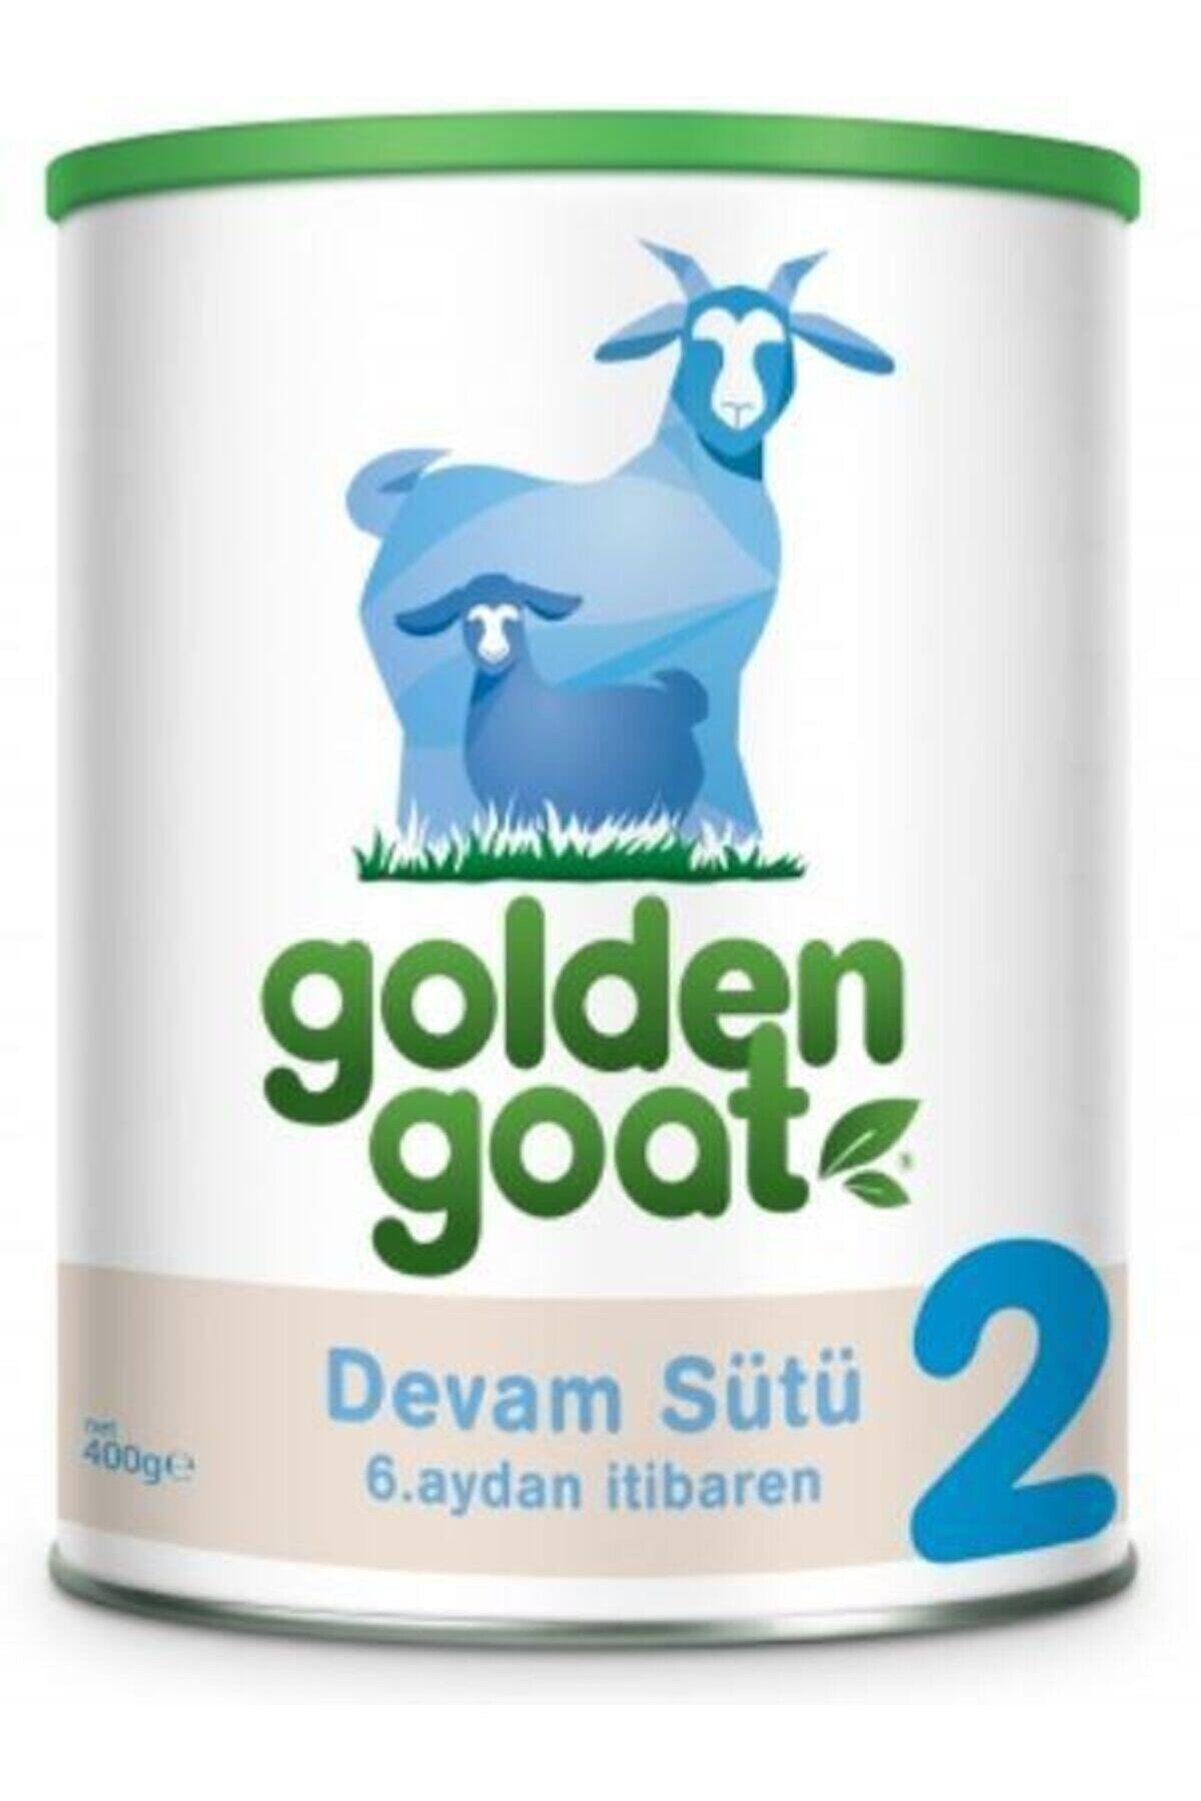 Golden Goat Keçi Sütlü Devam Sütü 400gr